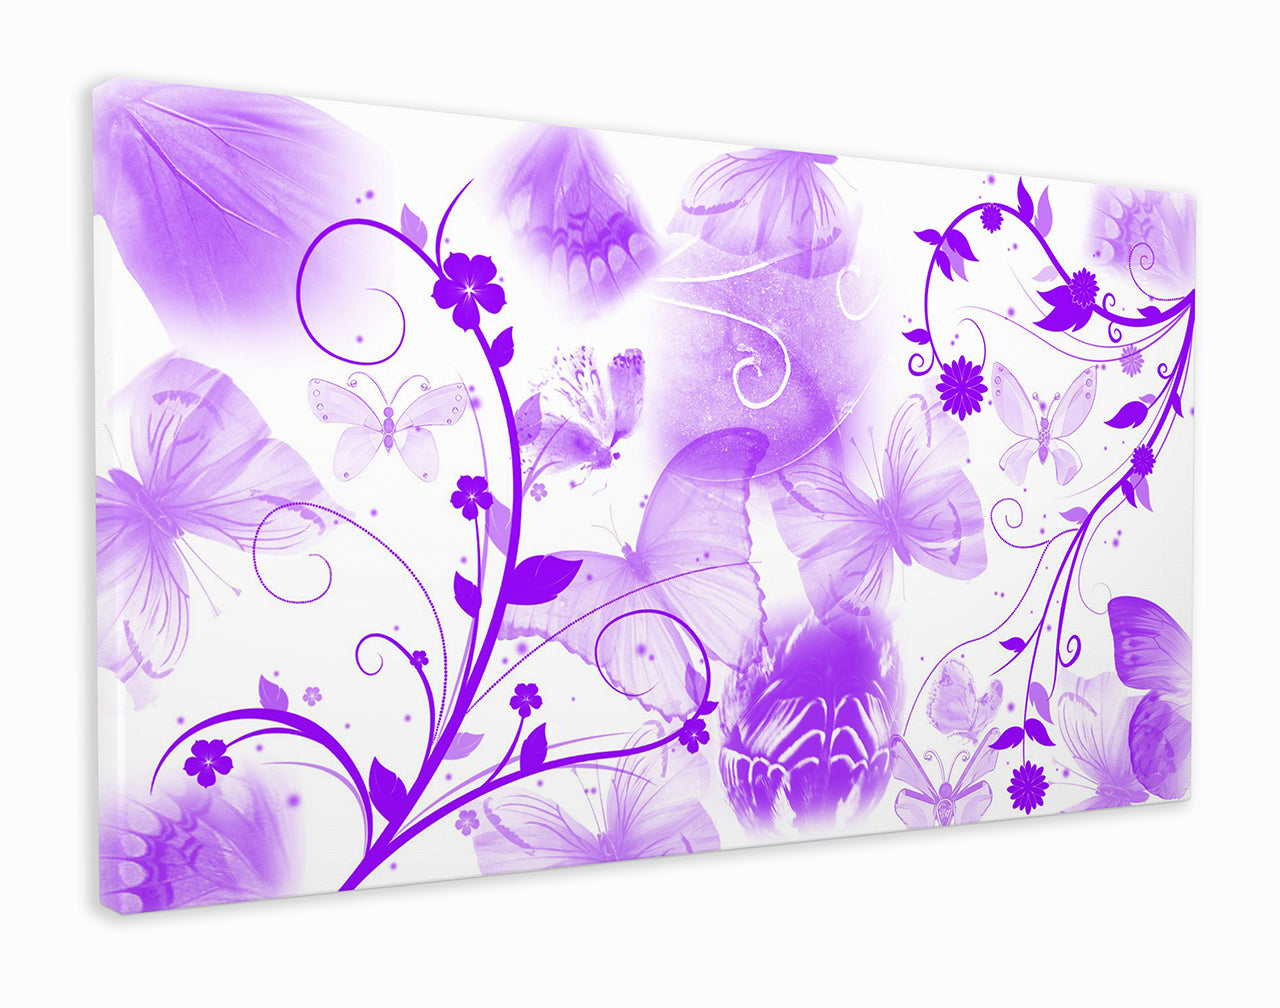 Lilac swirls